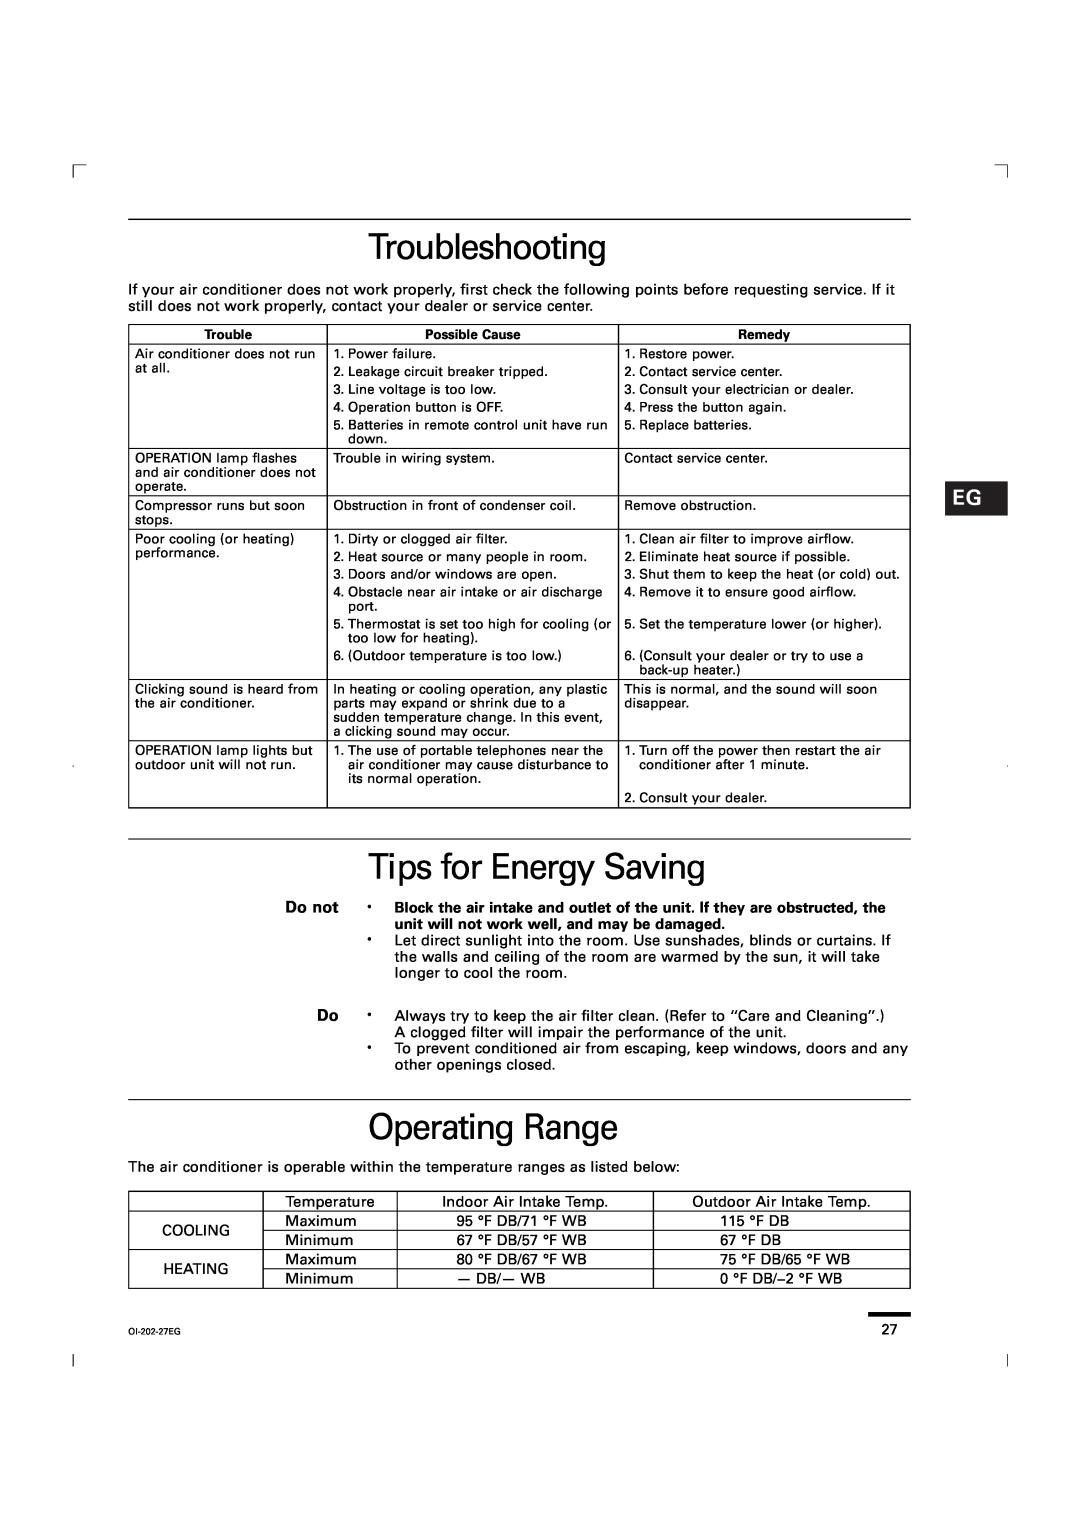 Sanyo KGS1411, CG1411 service manual Troubleshooting, Tips for Energy Saving, Operating Range, Do not ·, Do · 